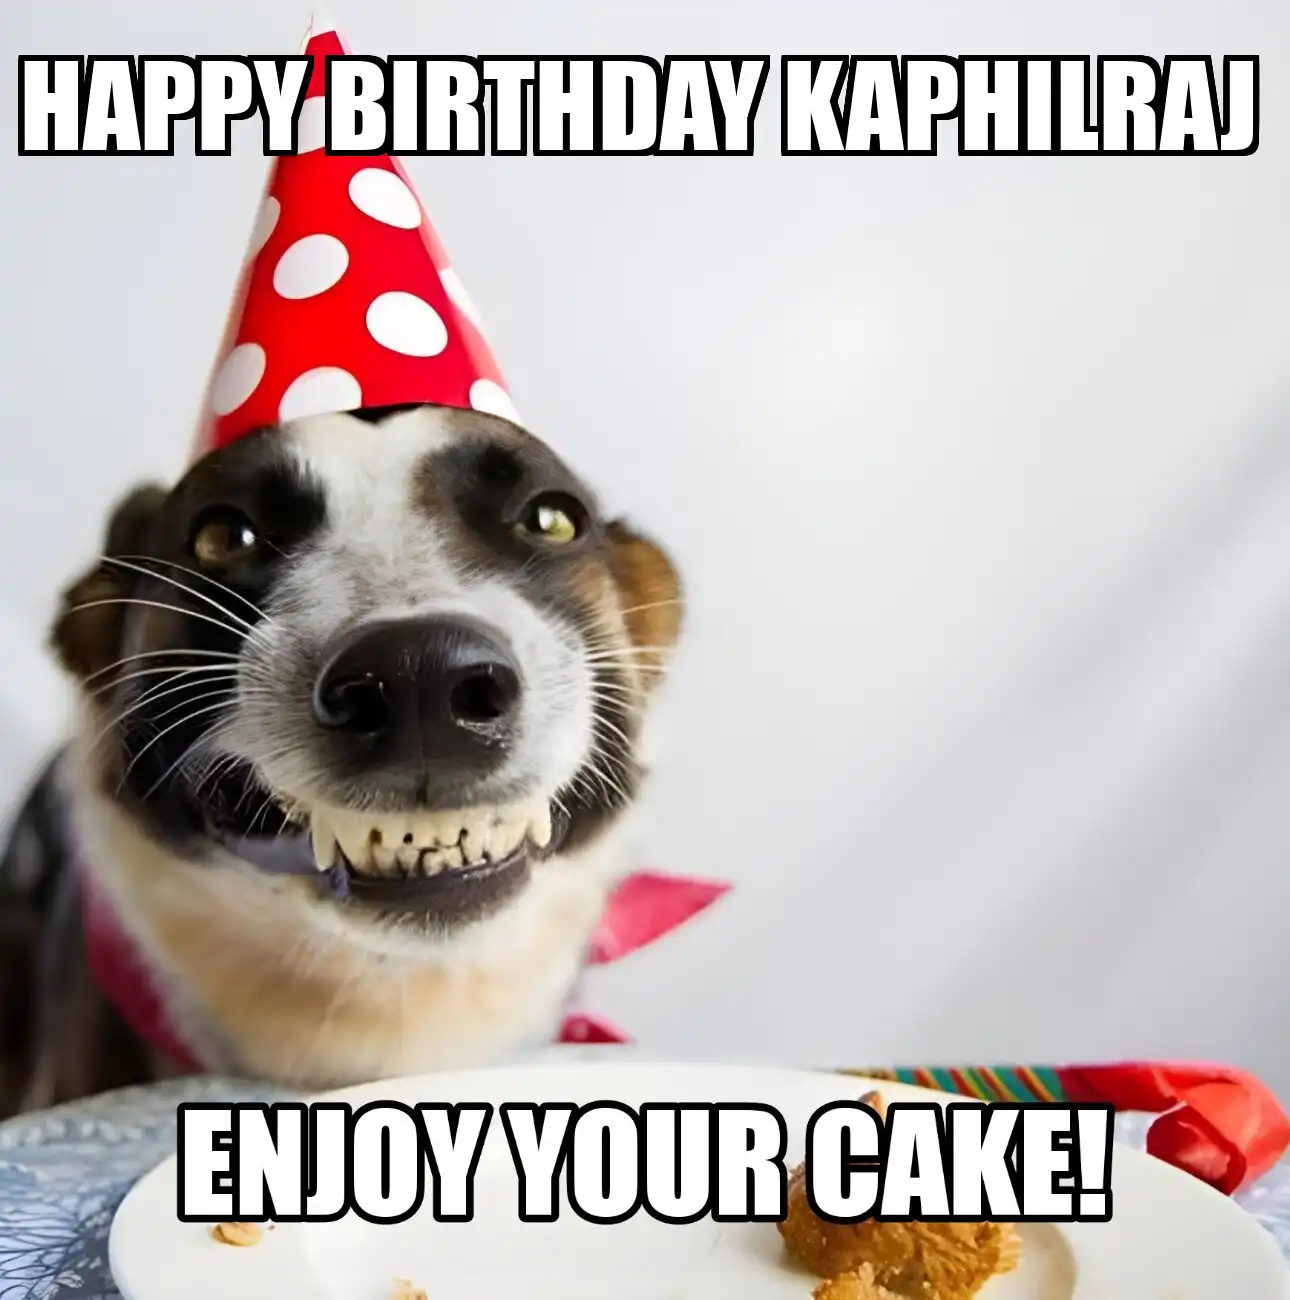 Happy Birthday Kaphilraj Enjoy Your Cake Dog Meme